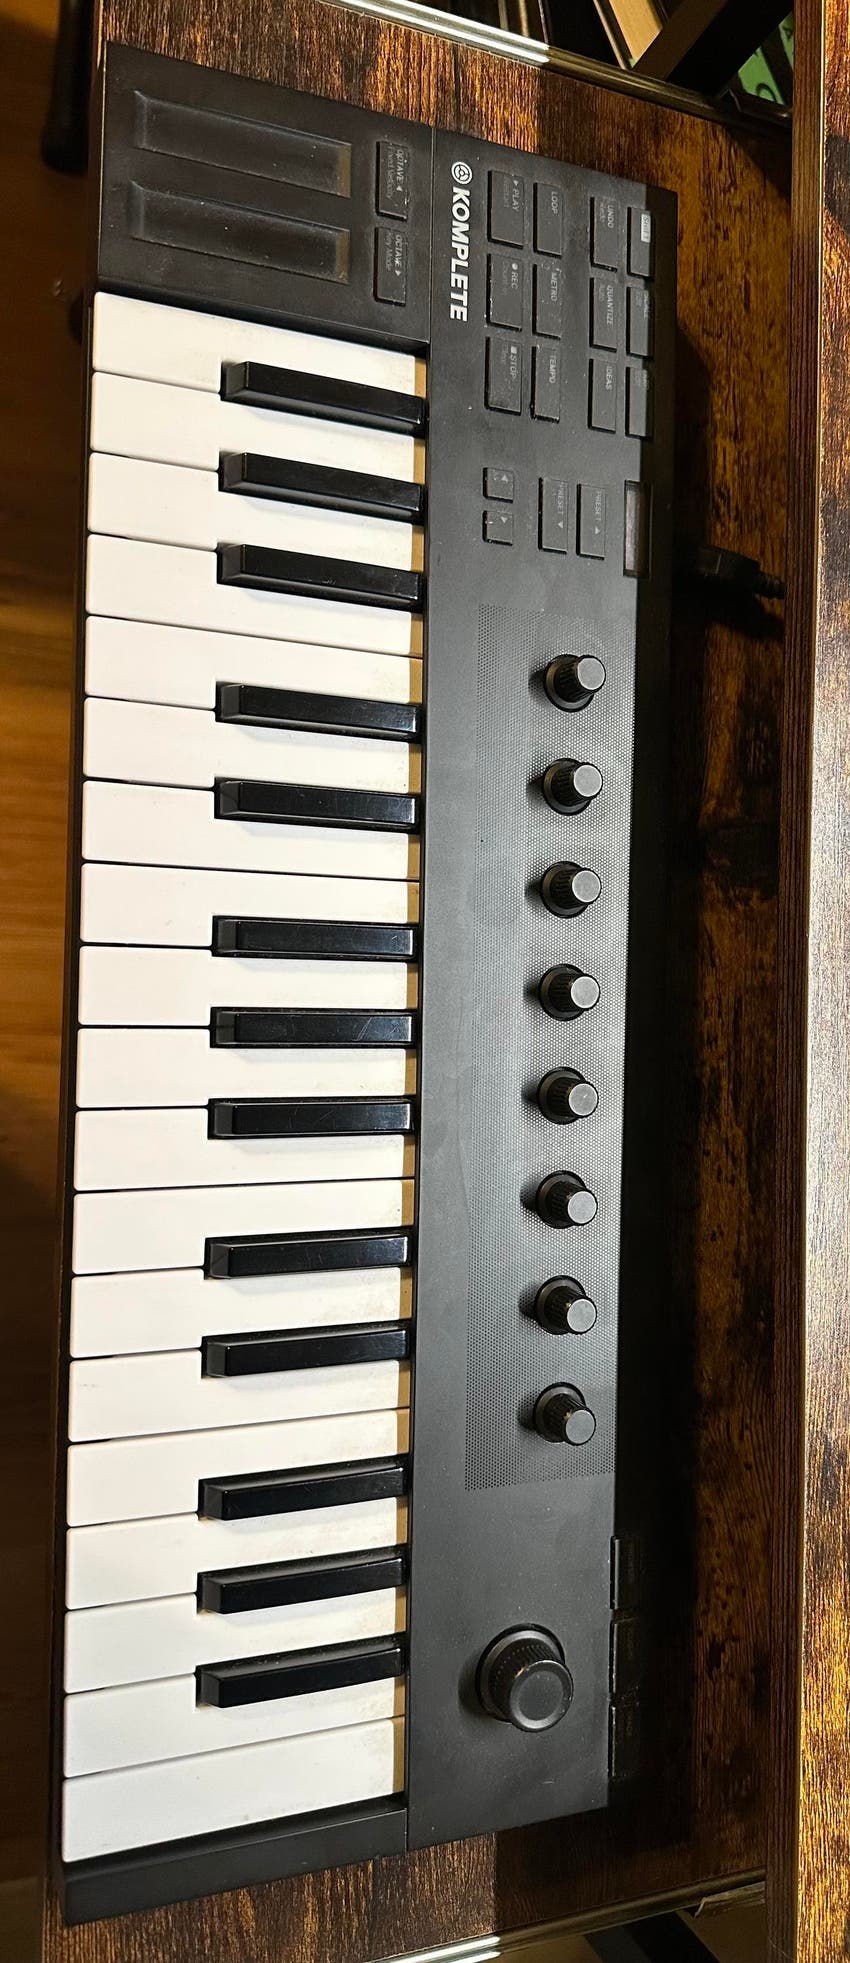 Komplete Kontrol M32 Controller-keyboard Native instruments